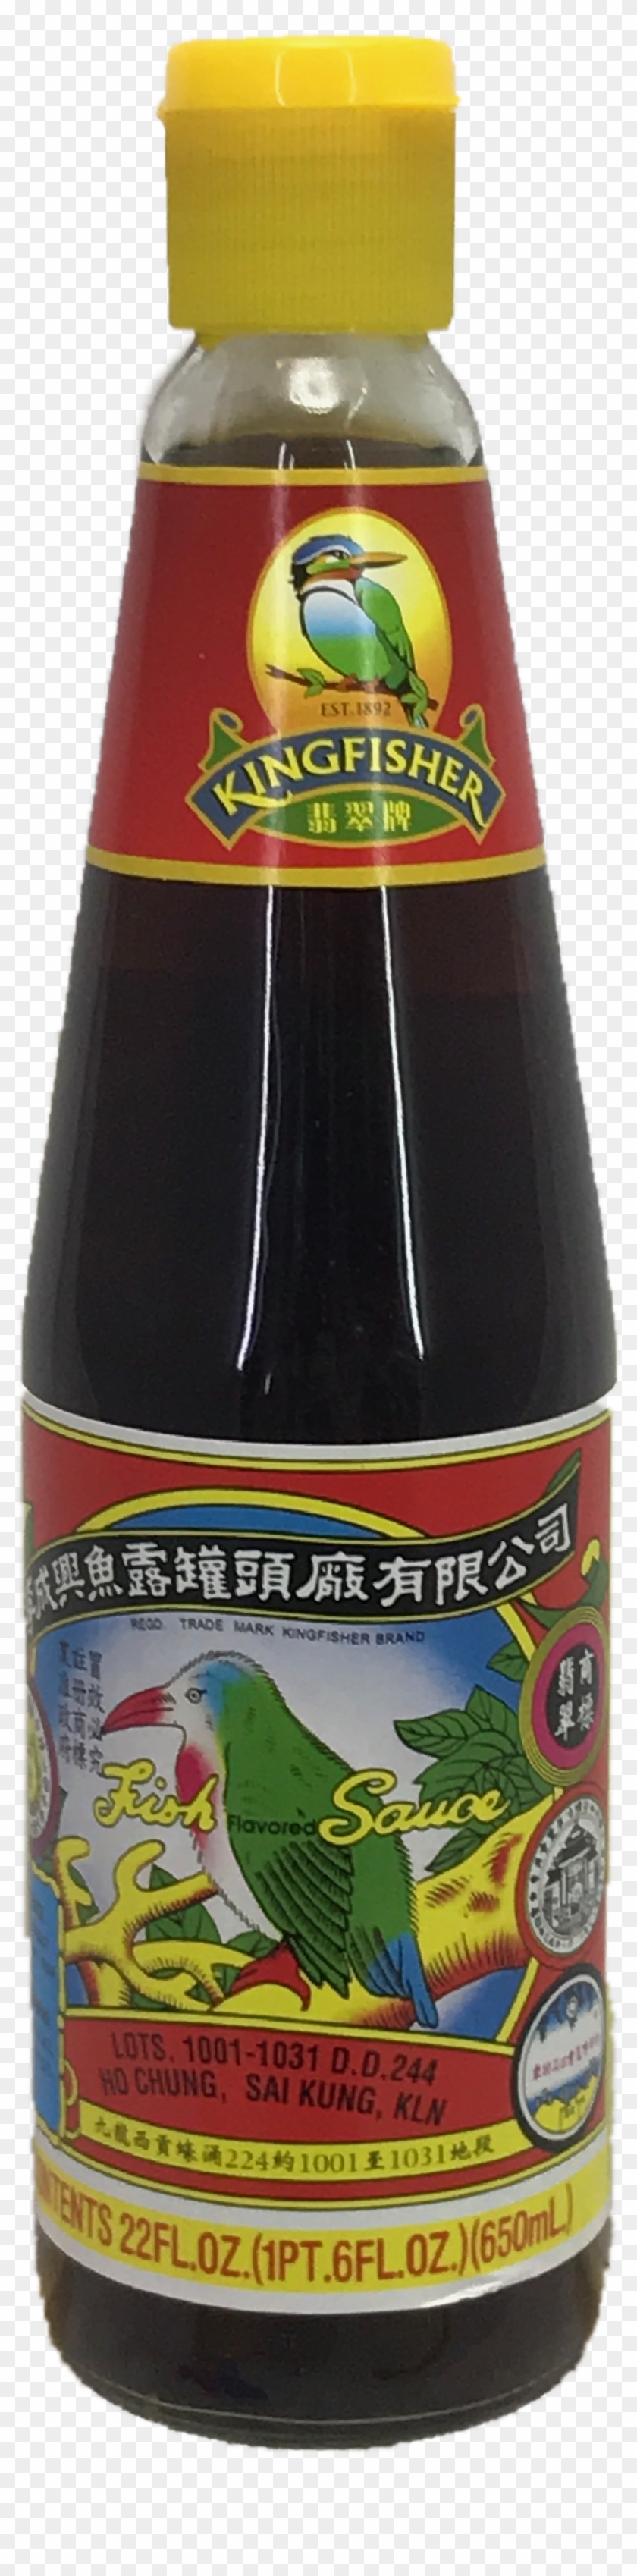 Kingfisher Brand Fish Sauce 650ml - Drink Clipart #2802127